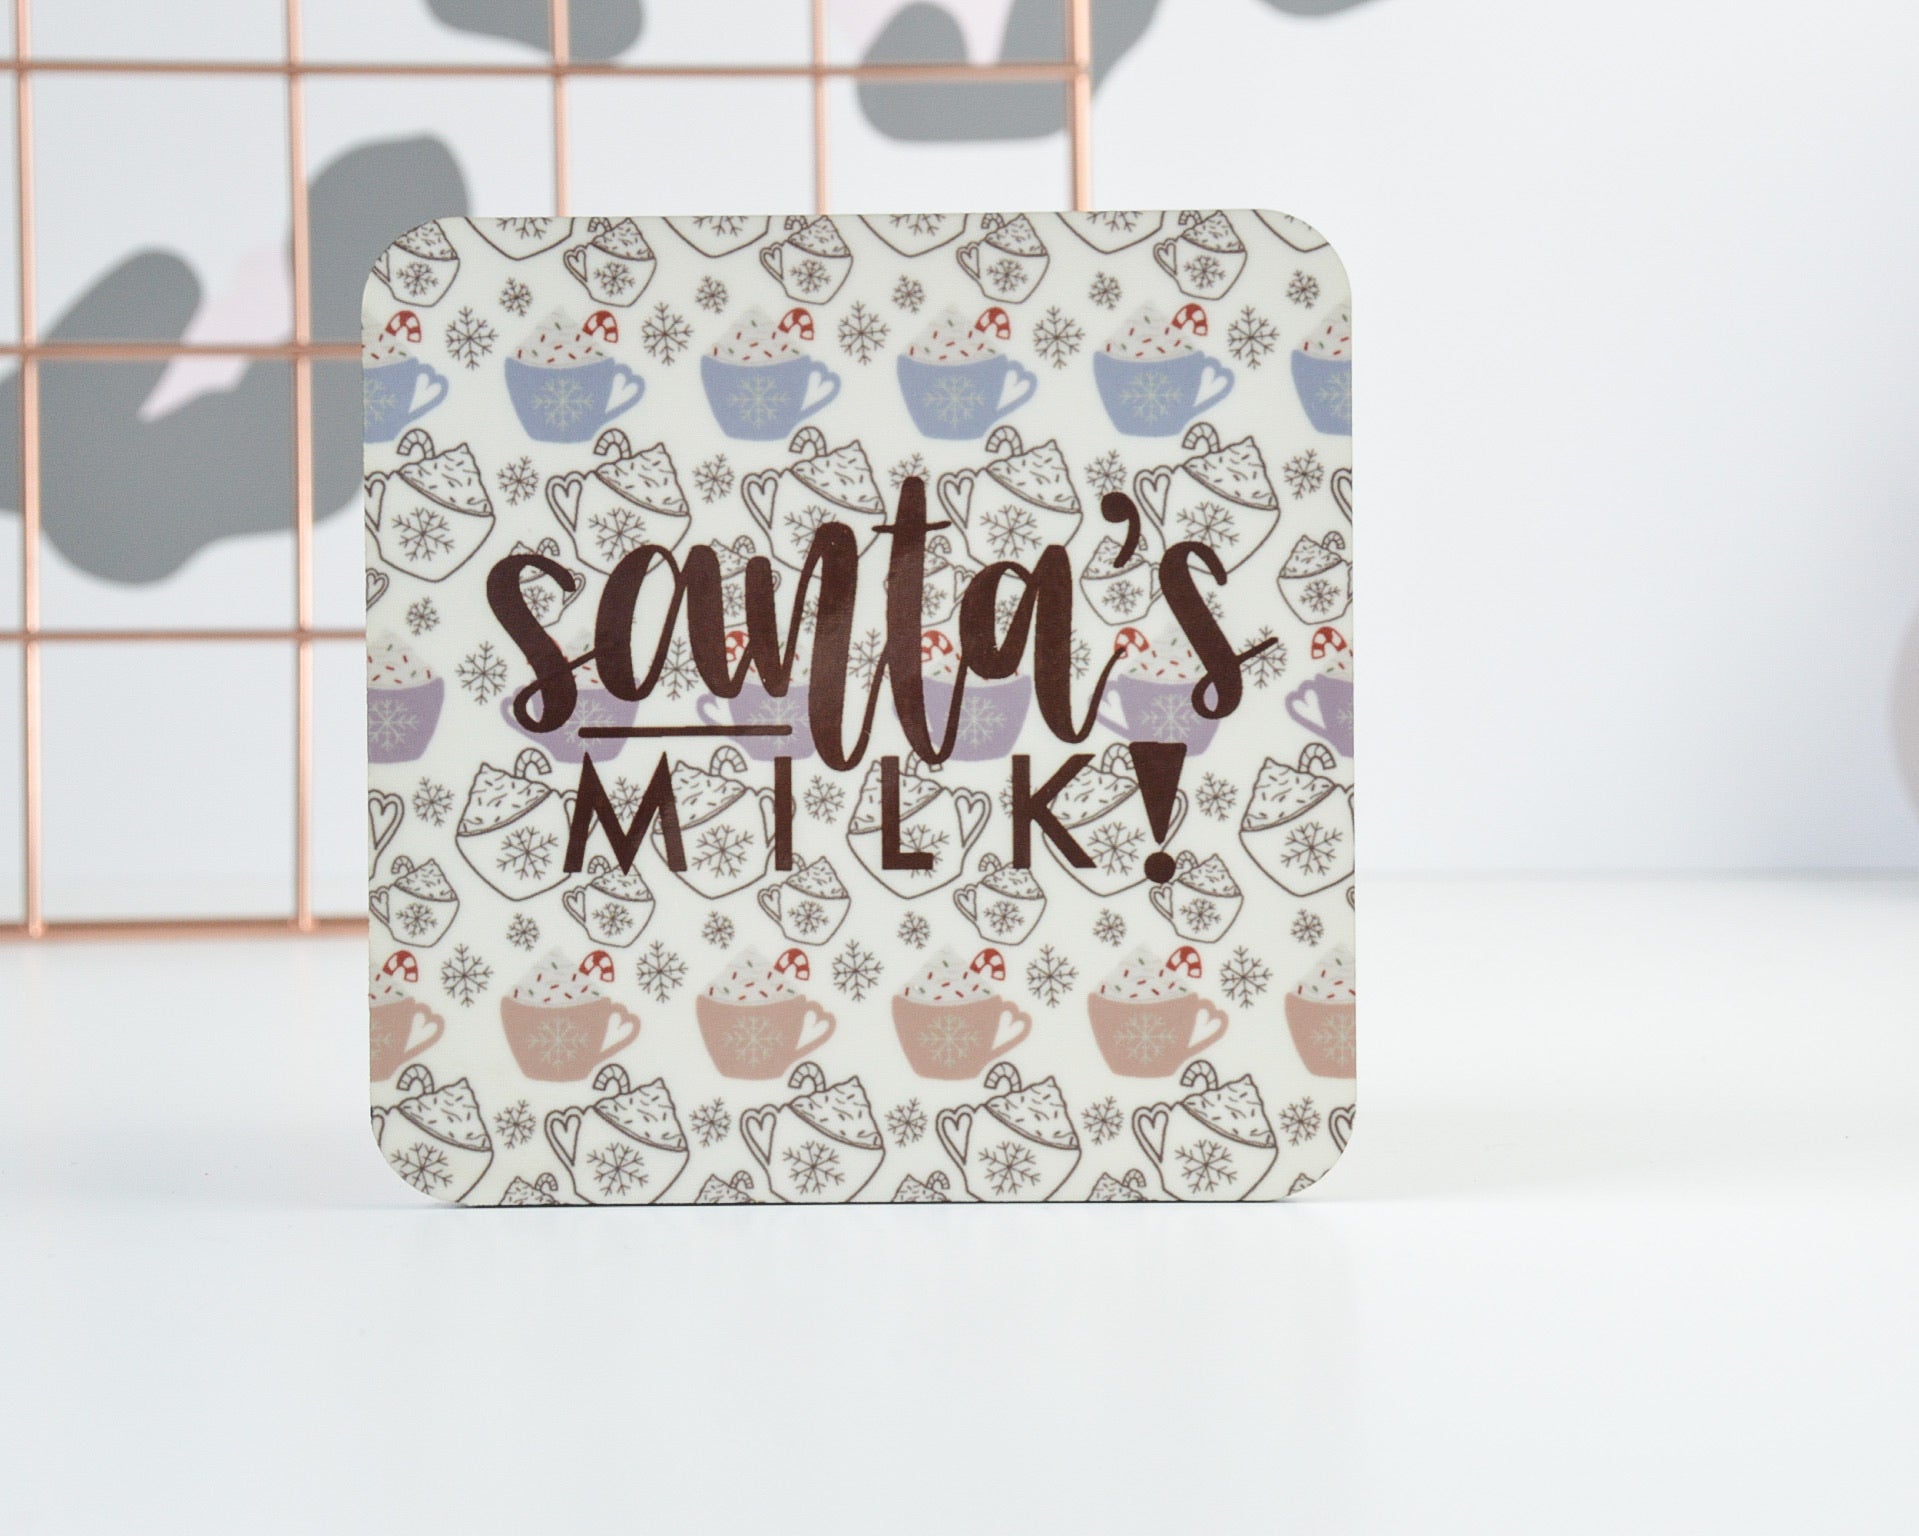 Santa's Milk Coaster